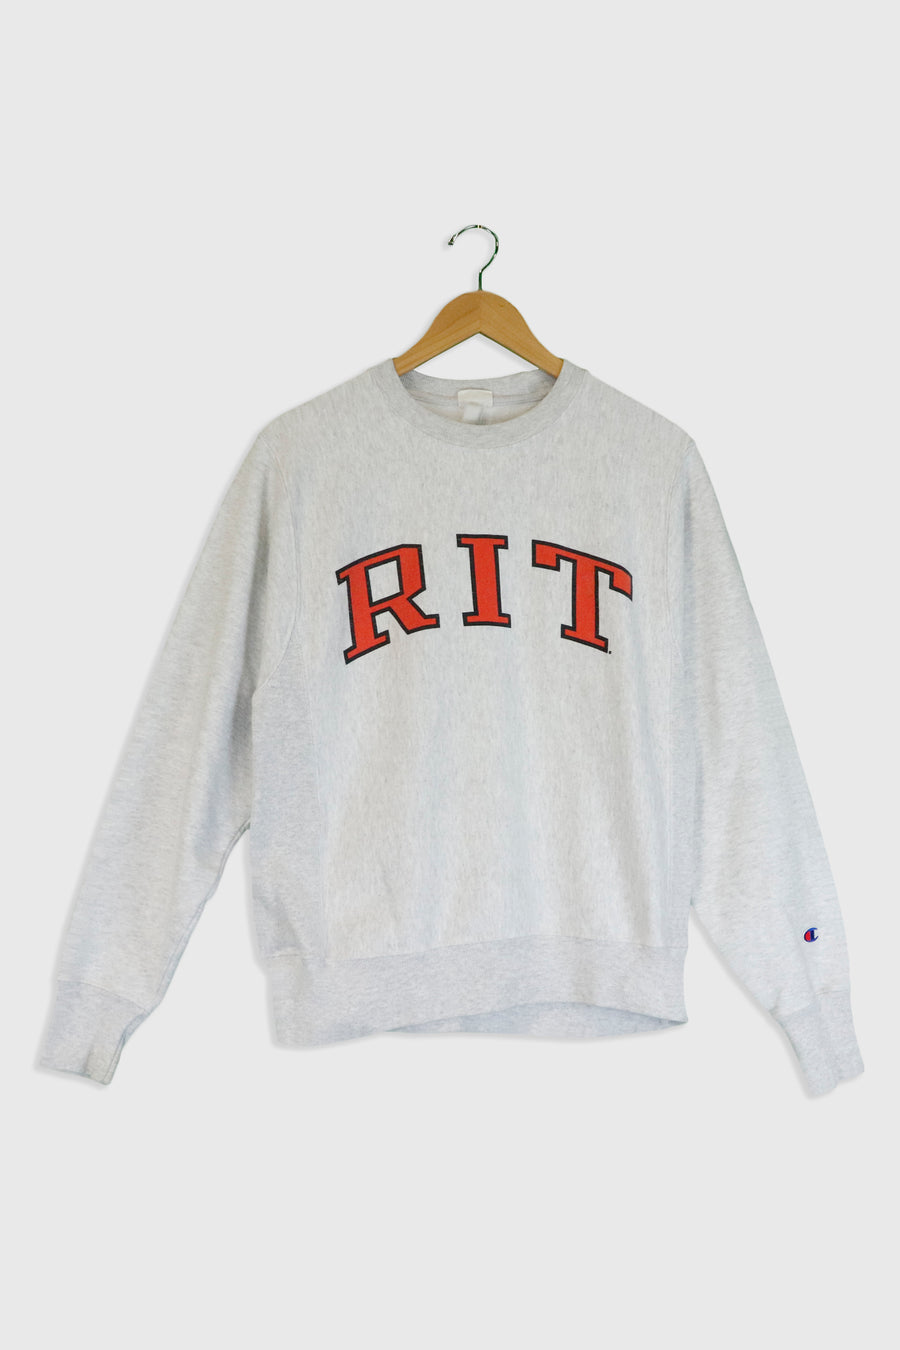 Vintage Champion Rit Sweatshirt Sz S